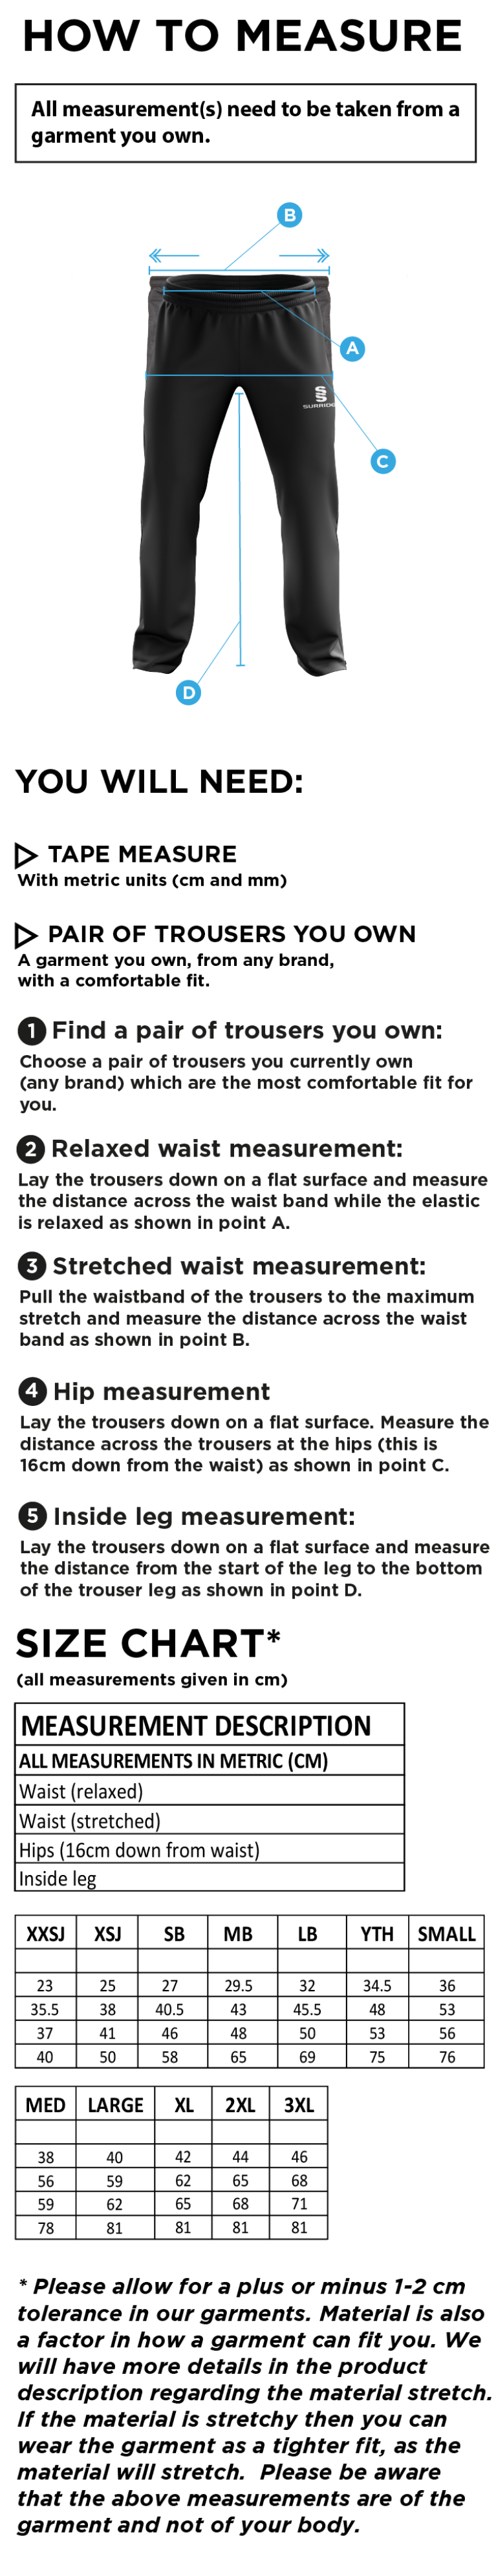 RIDGEWAY ACADEMY PE STAFF - POPLIN TRACK PANT - Size Guide